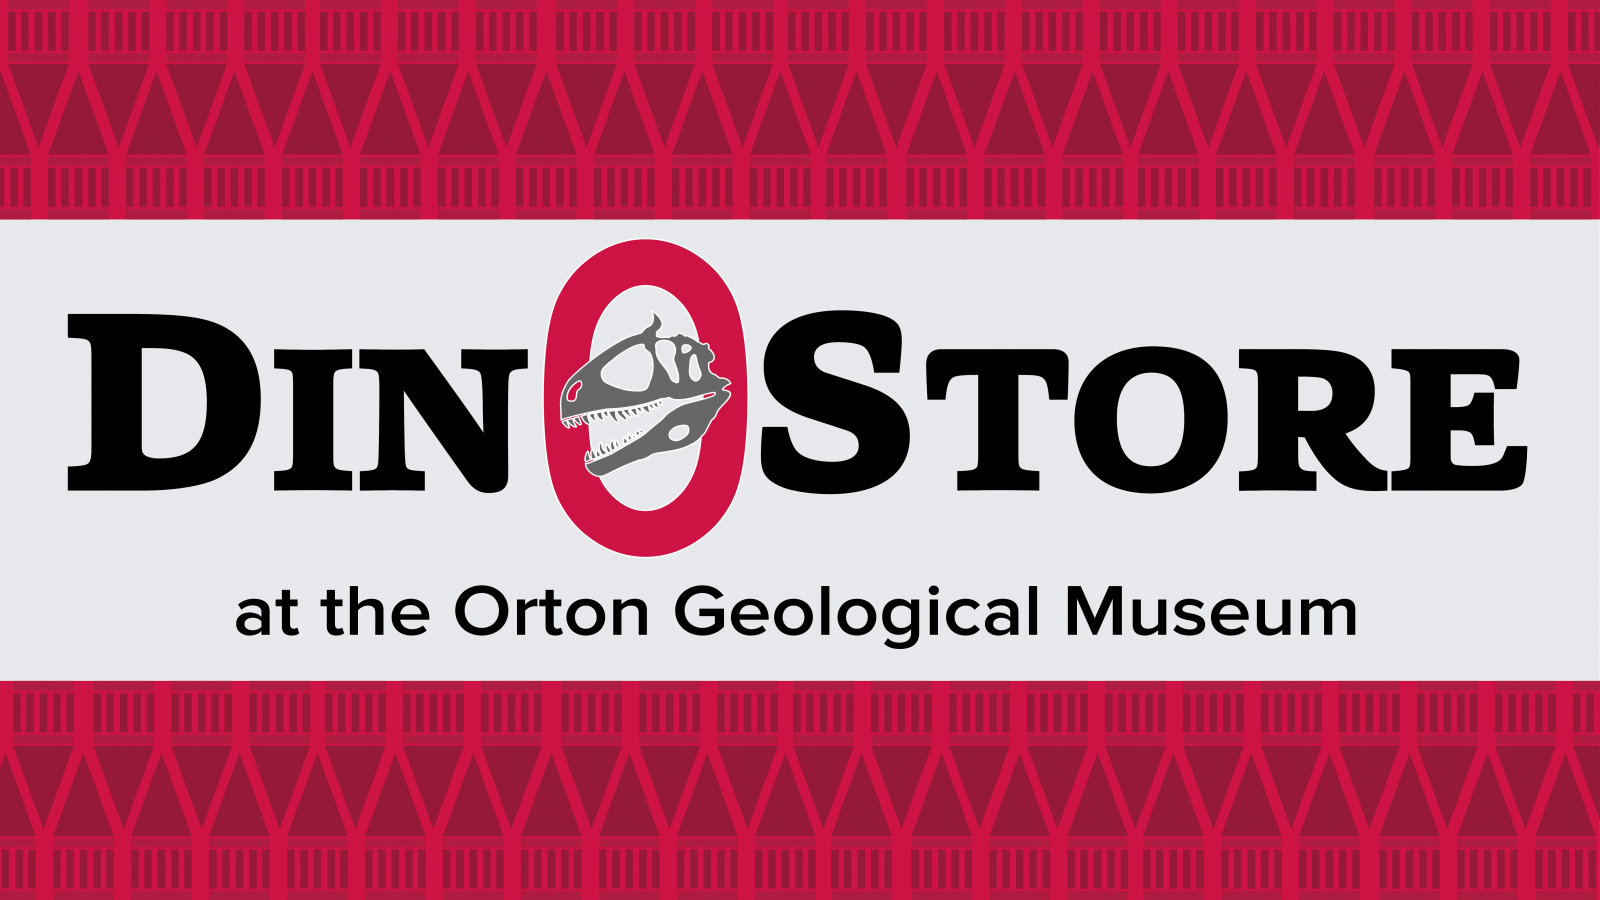 Dinostore artwork, "dinostore at the Orton Geological Museum" featuring the bust of Cryolophosaurus ellioti